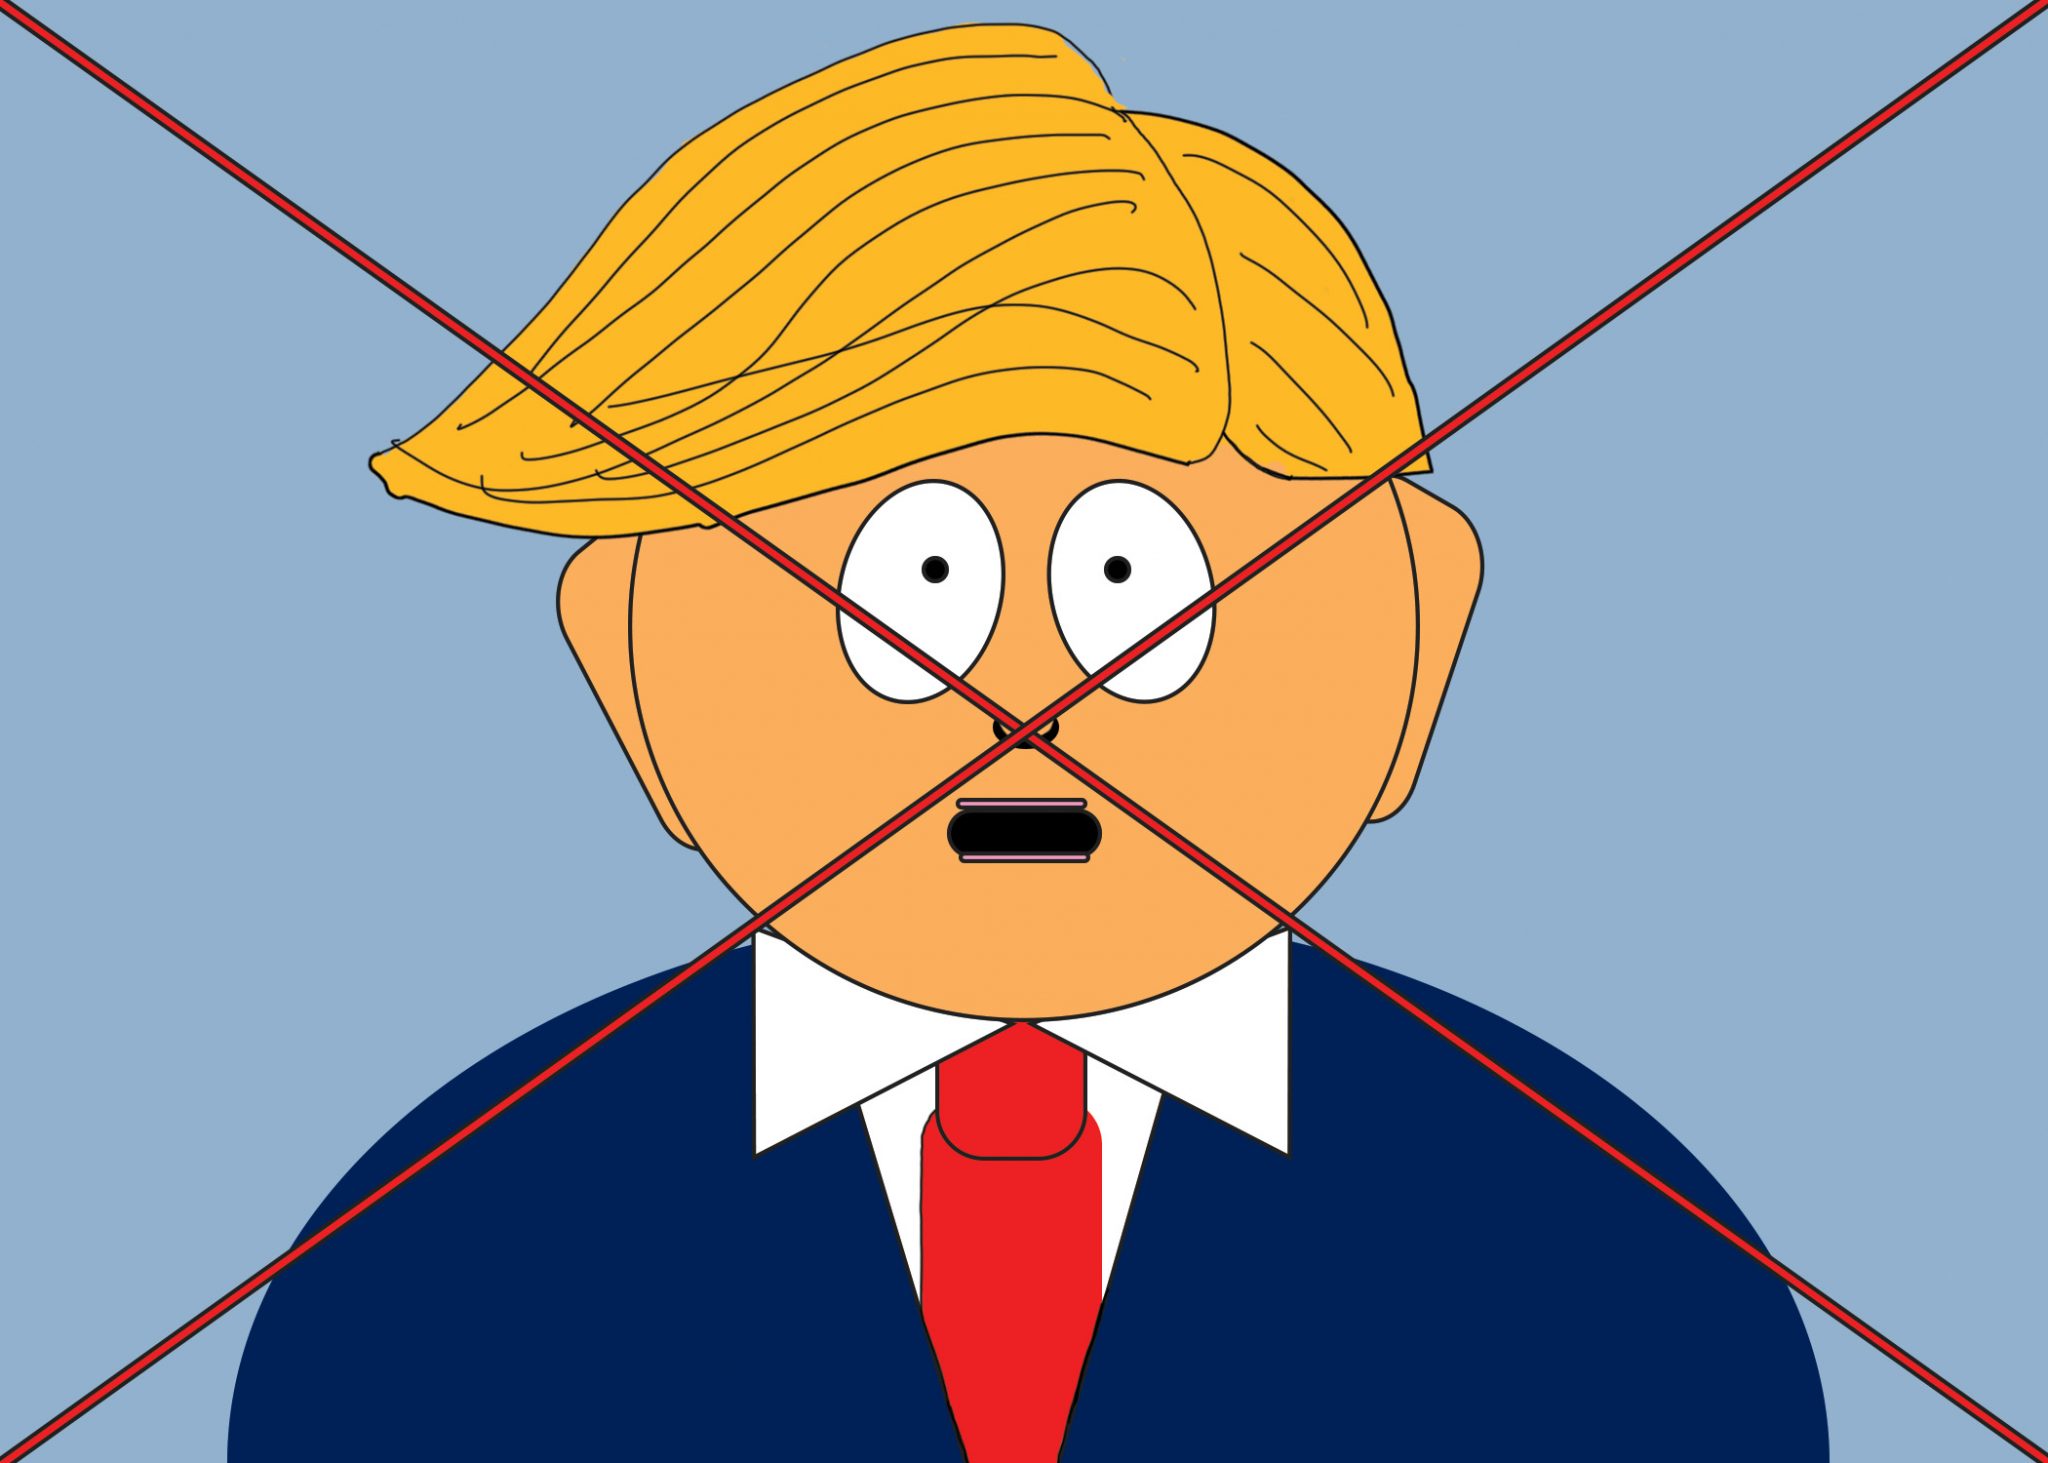 South Park dumps Trump talk ahead of upcoming season – The Cord